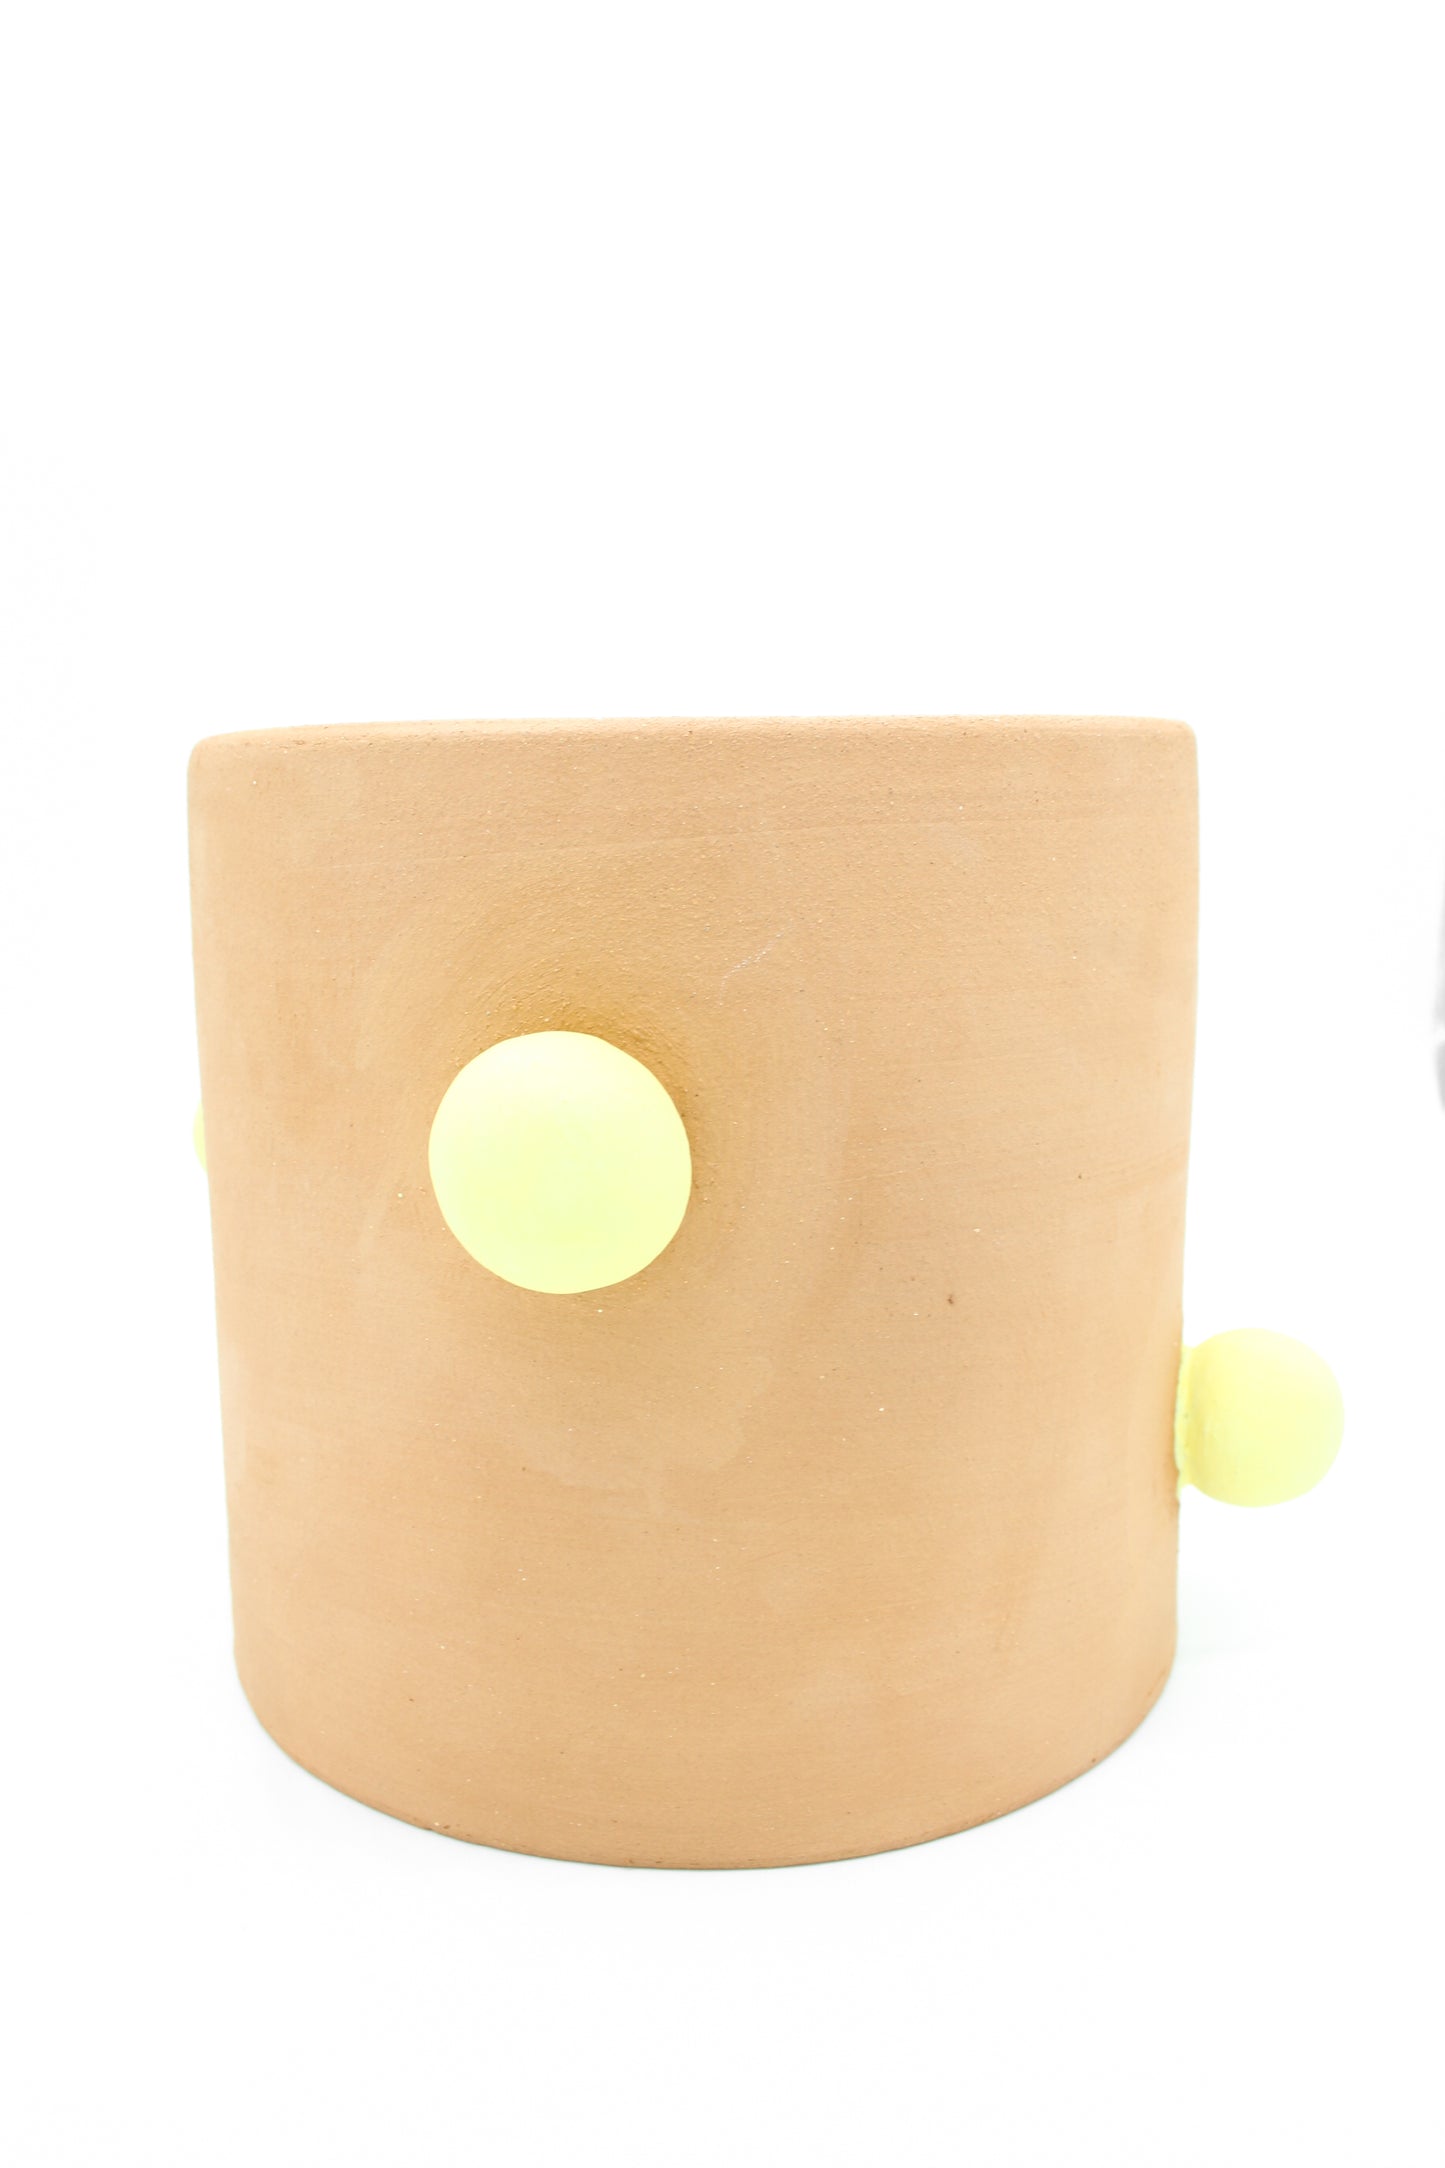 Planter with Yellow Colored Balls - Handmade Stoneware